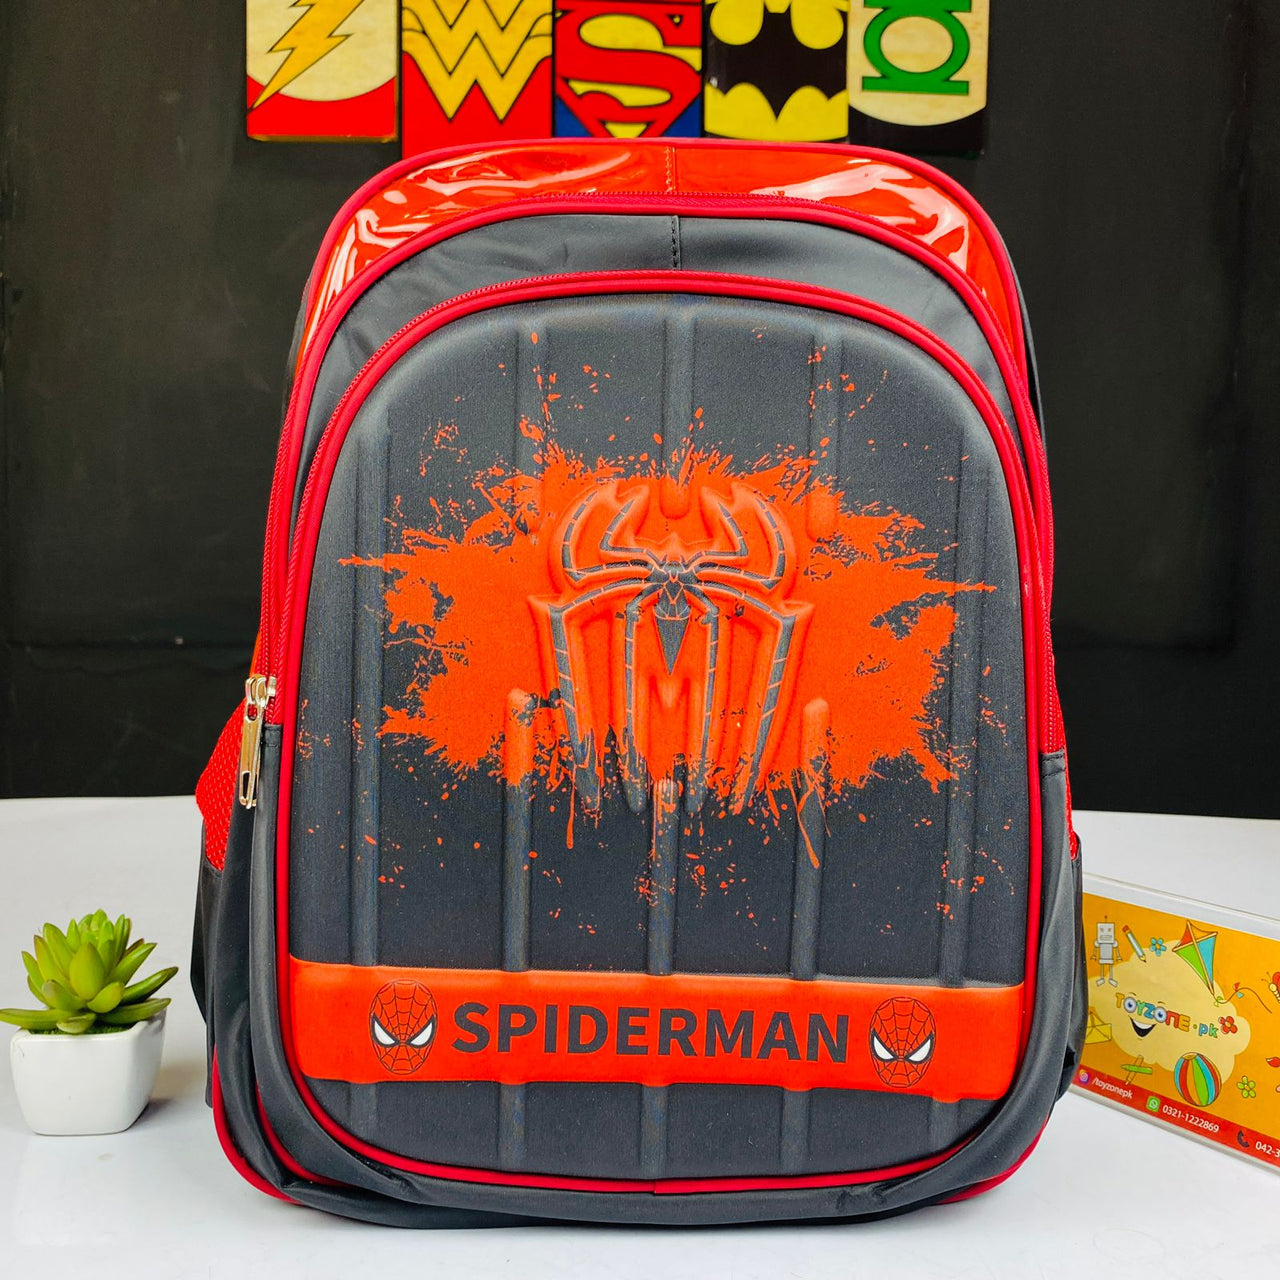 Spiderman School Bag For Kids